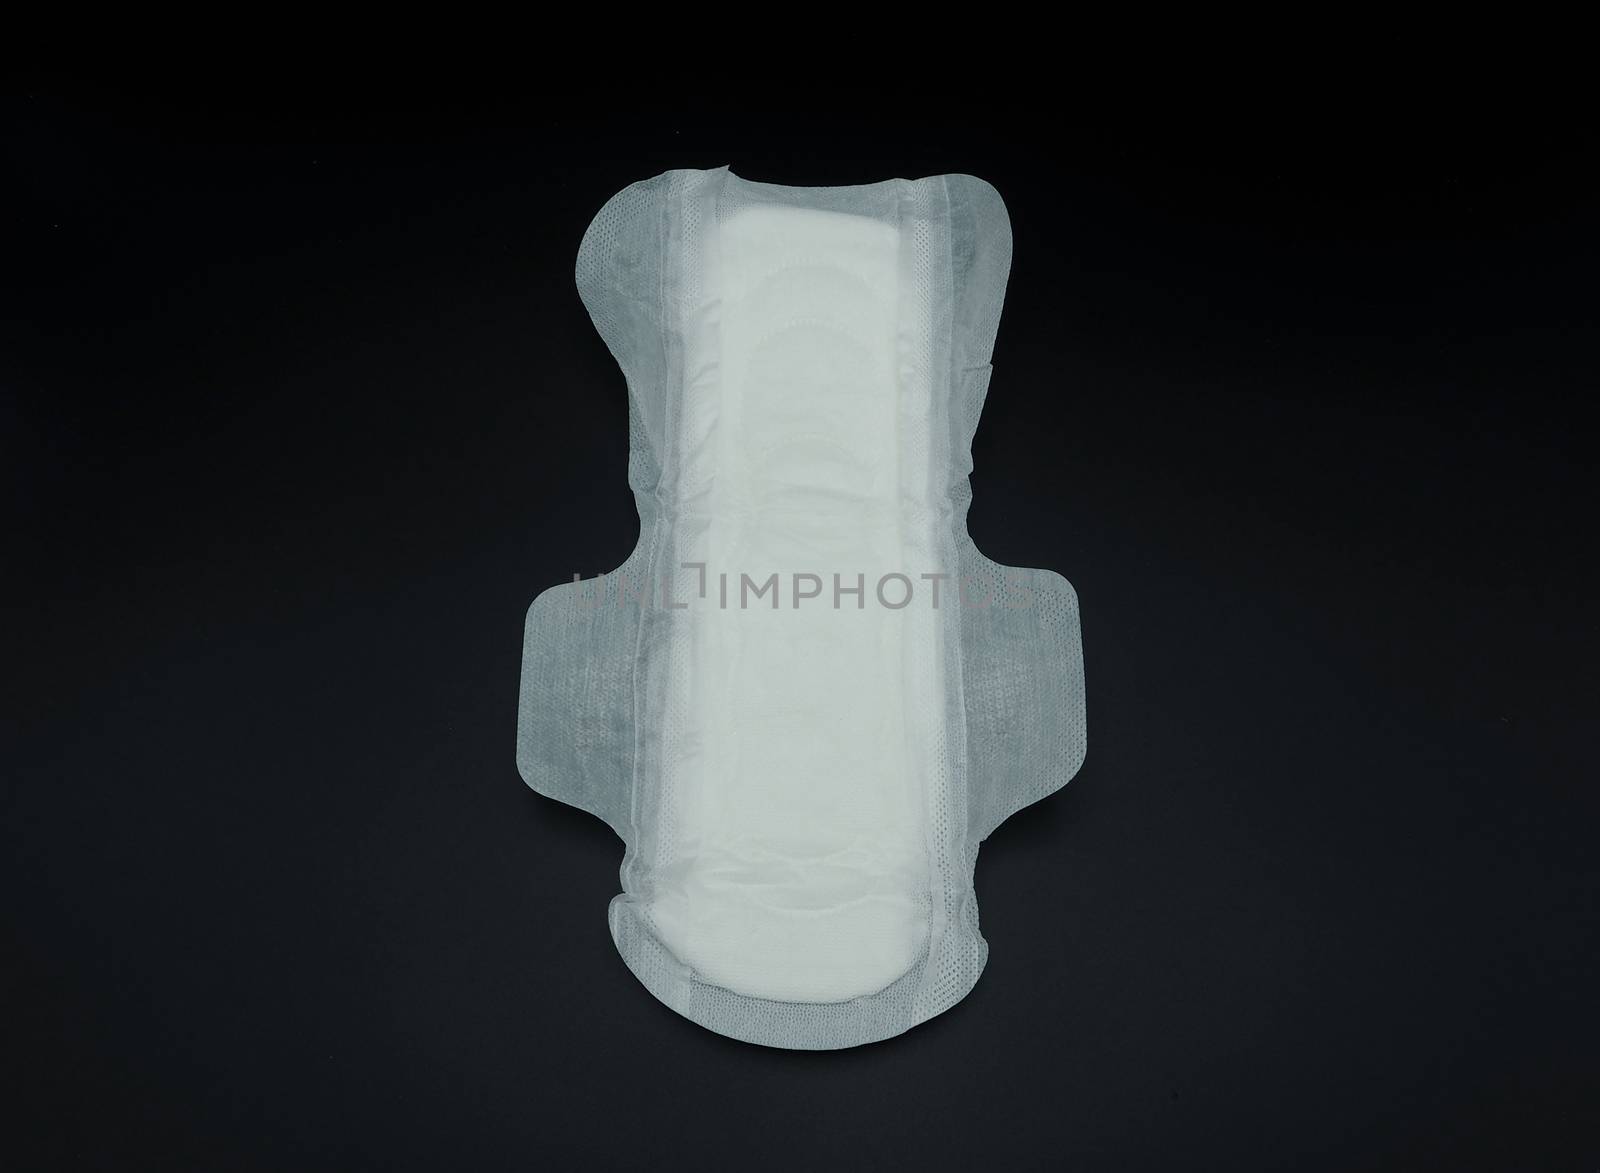 White clean hygiene sanitary napkin by gnepphoto